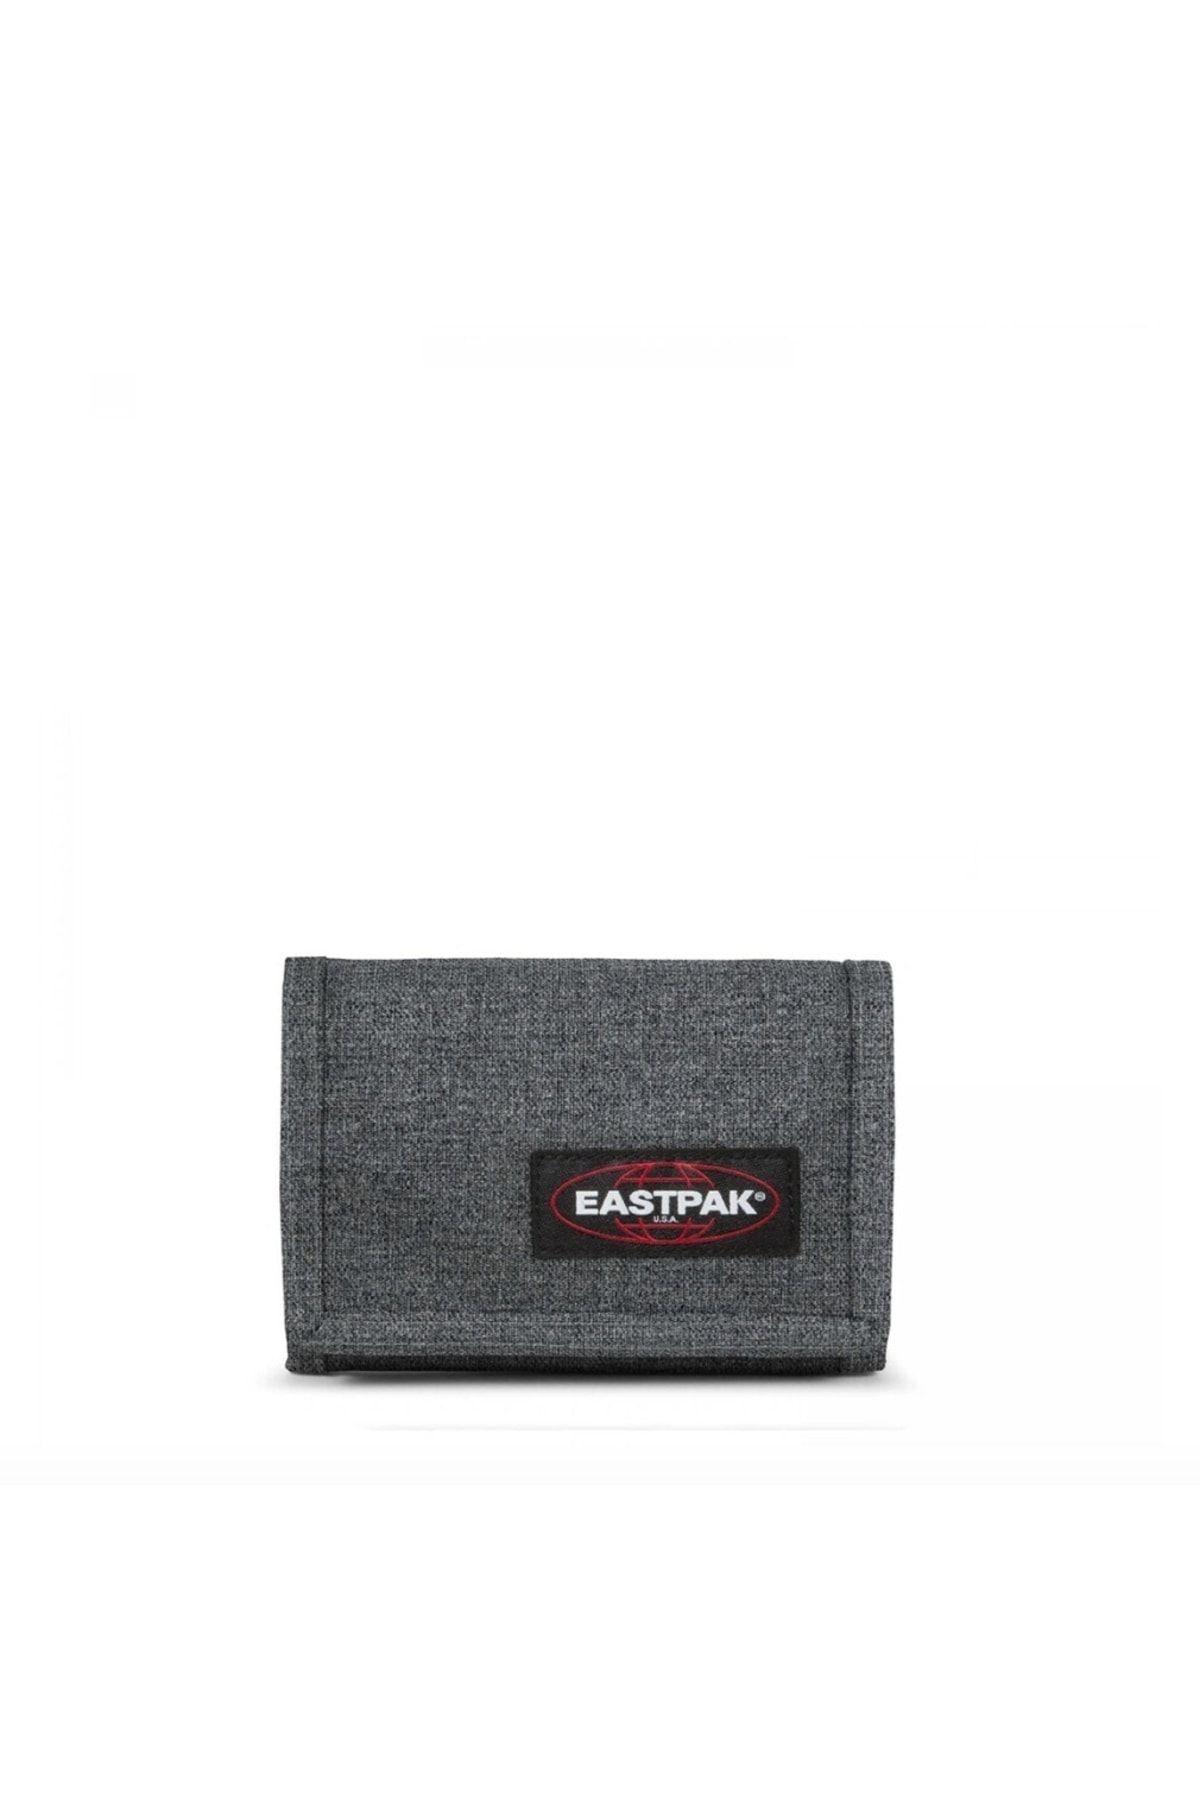 Eastpak Crew Single - Ek00037177h1